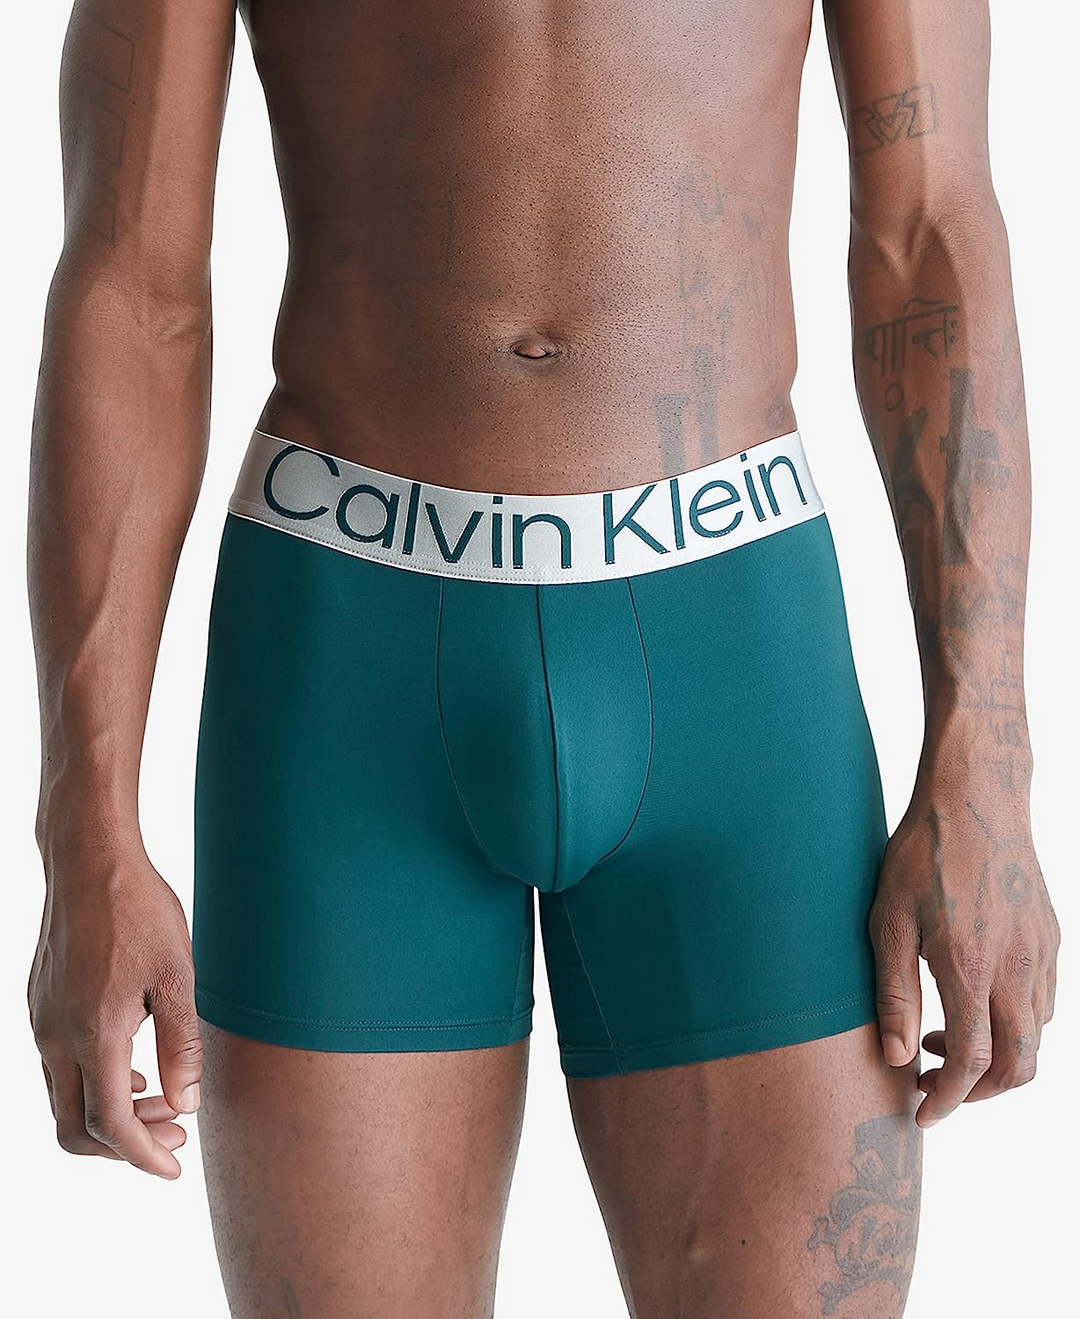 Calvin Klein Men's Reconsidered Boxer Shorts